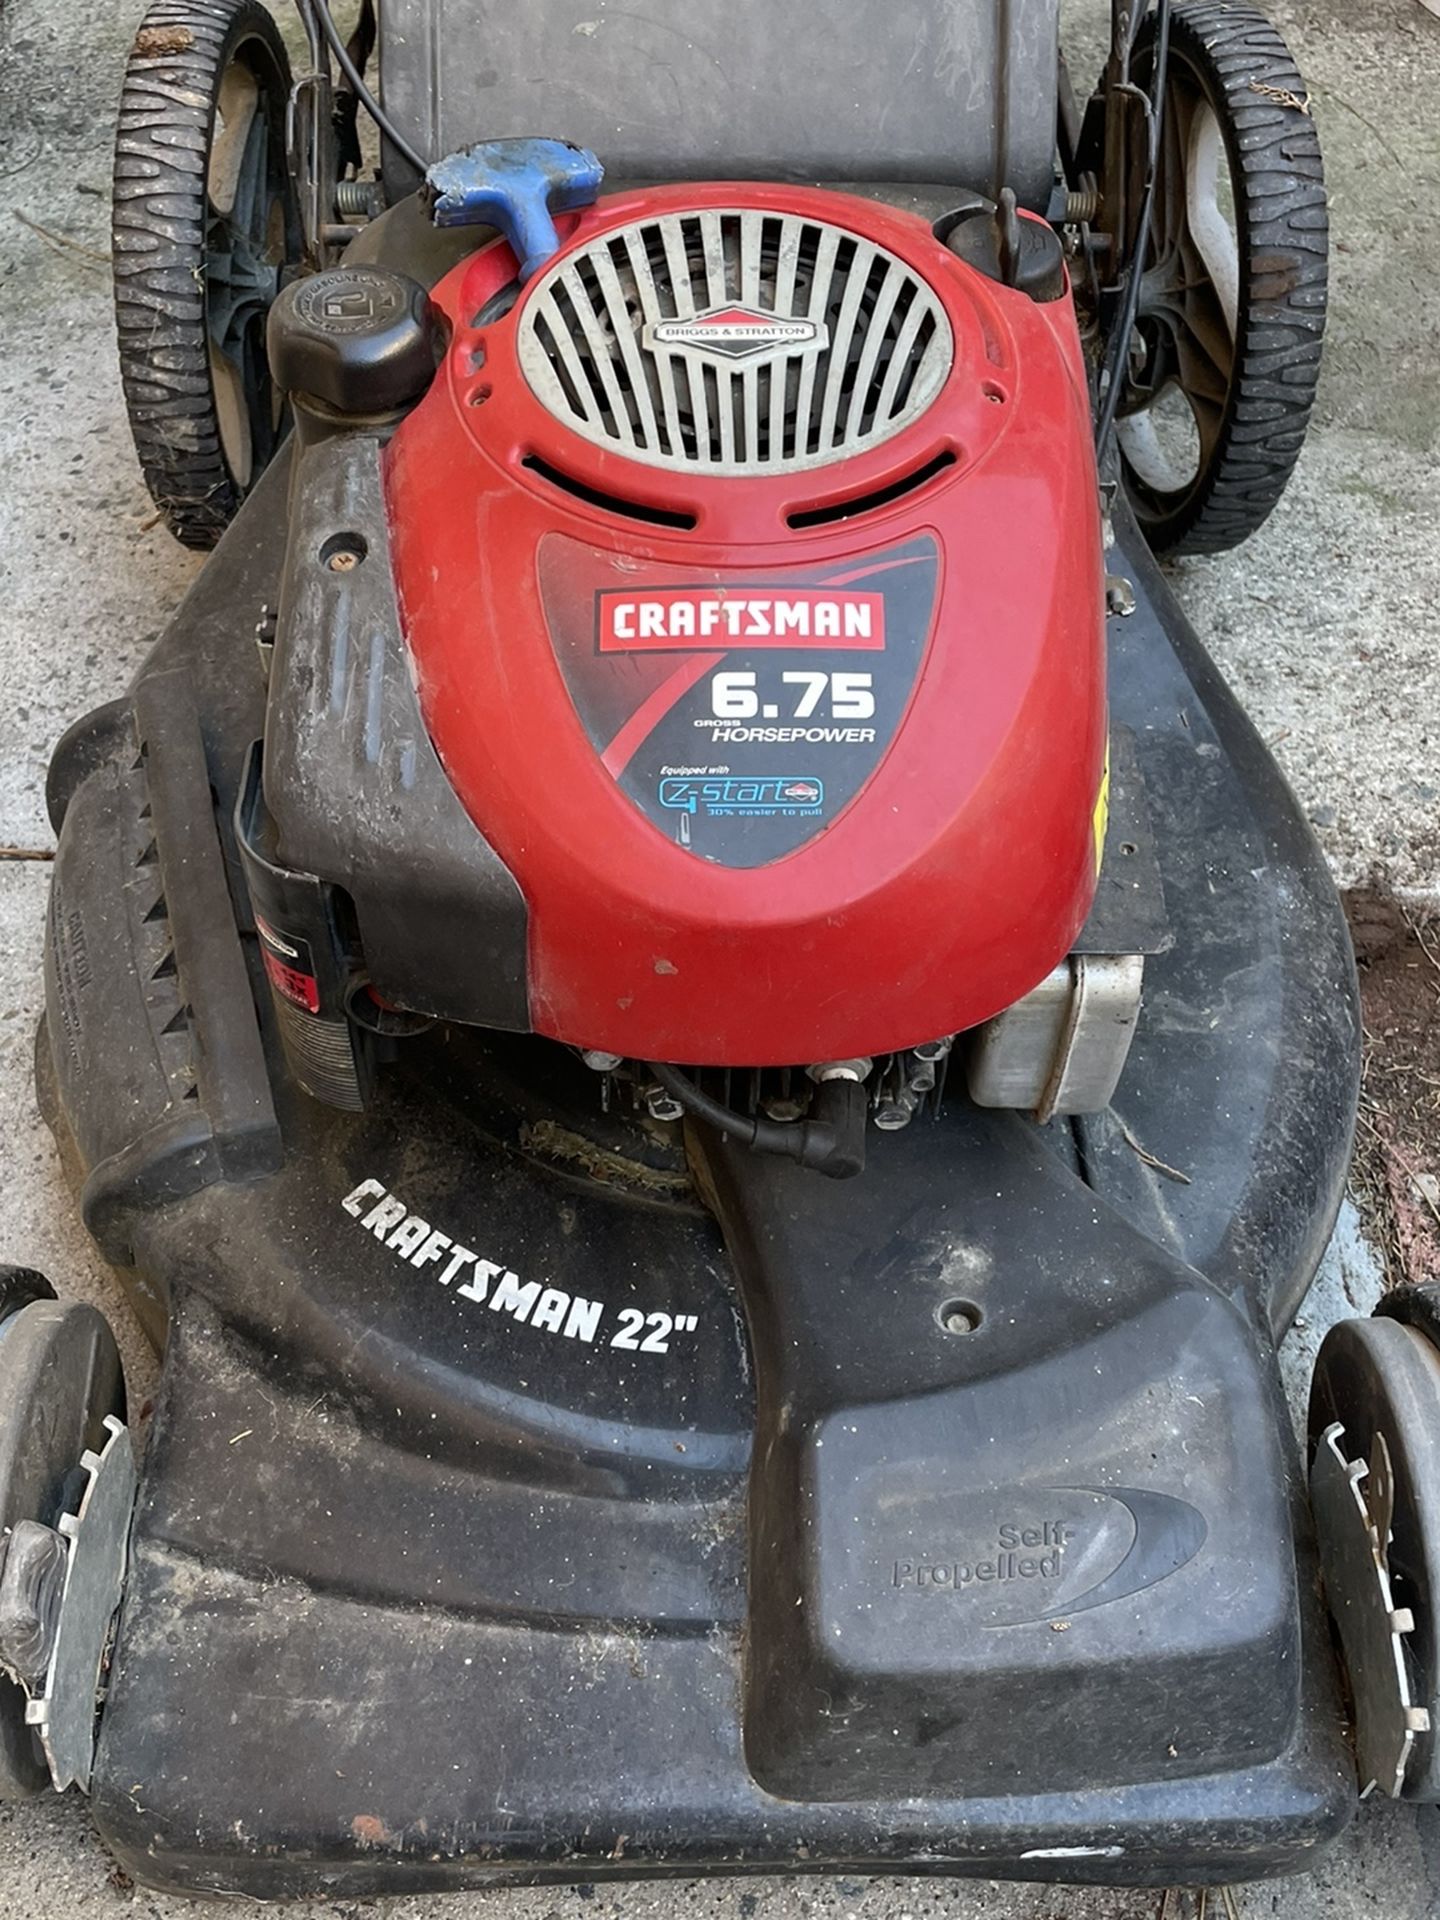 Craftsman 22” Lawn Mower